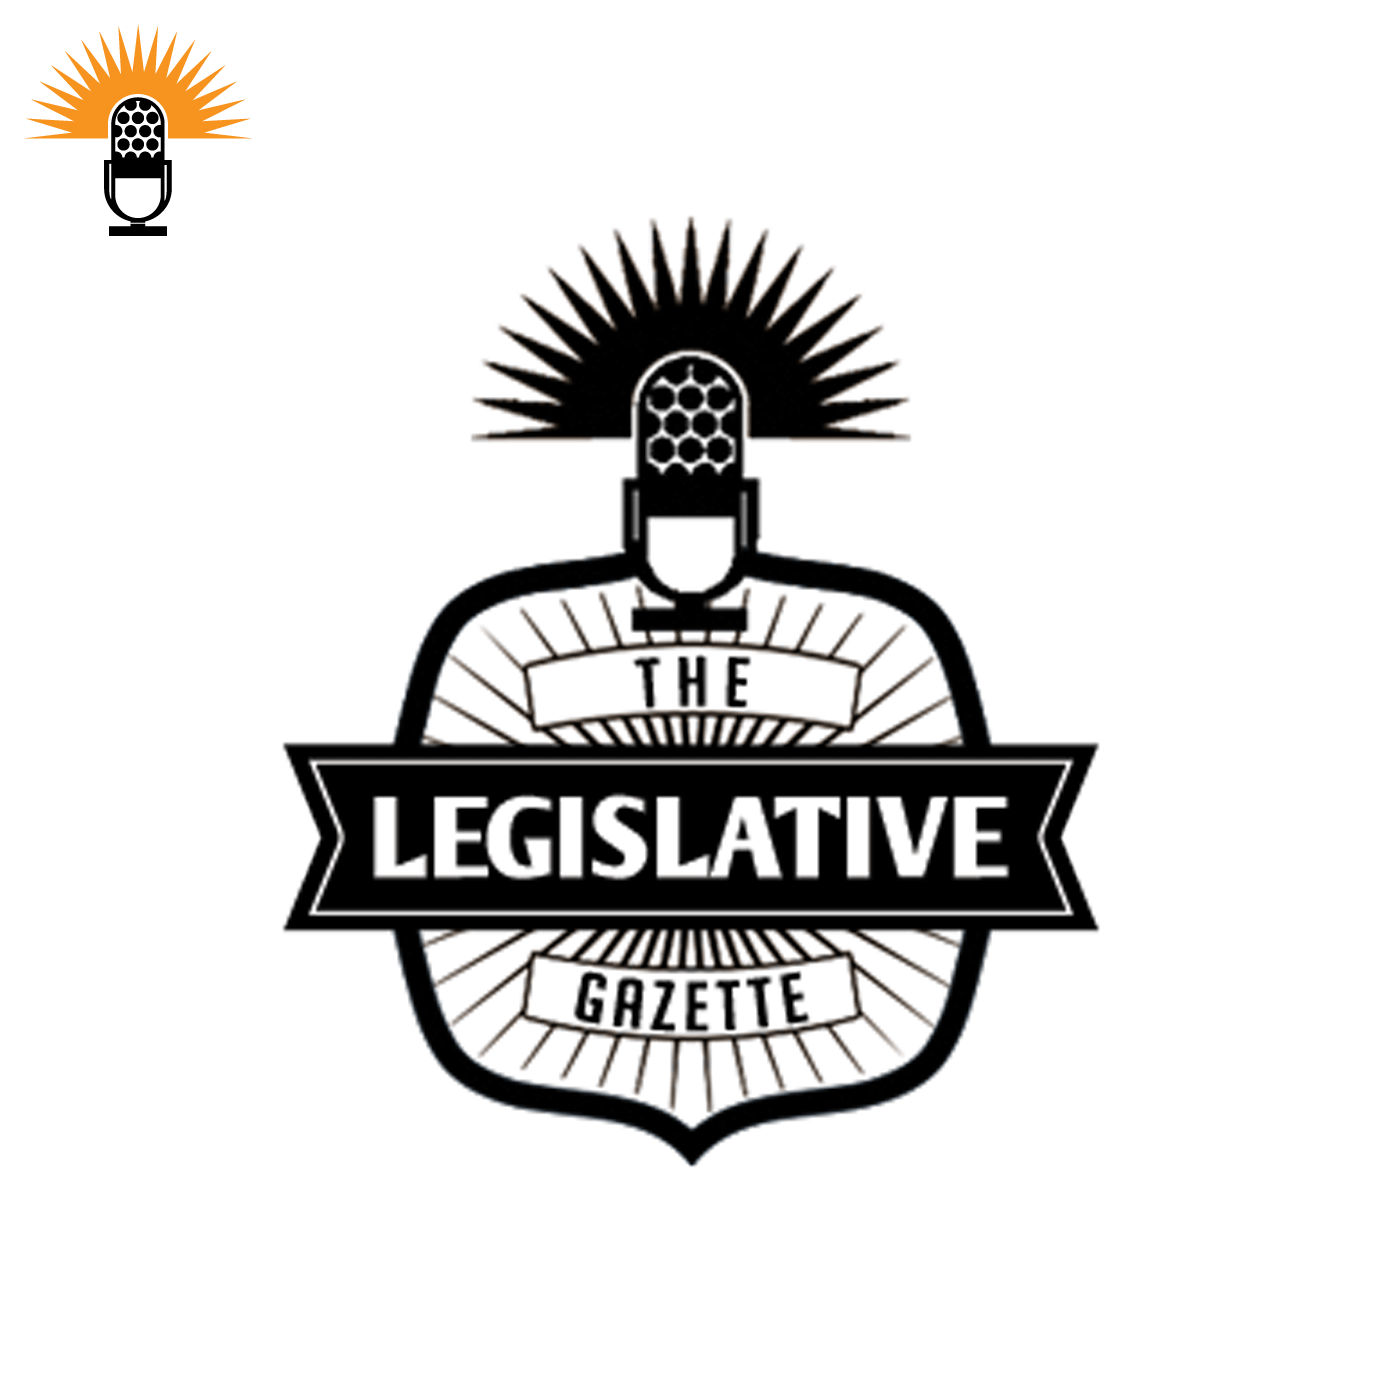 The Legislative Gazette - Senate holds hearing on cannabis rollout